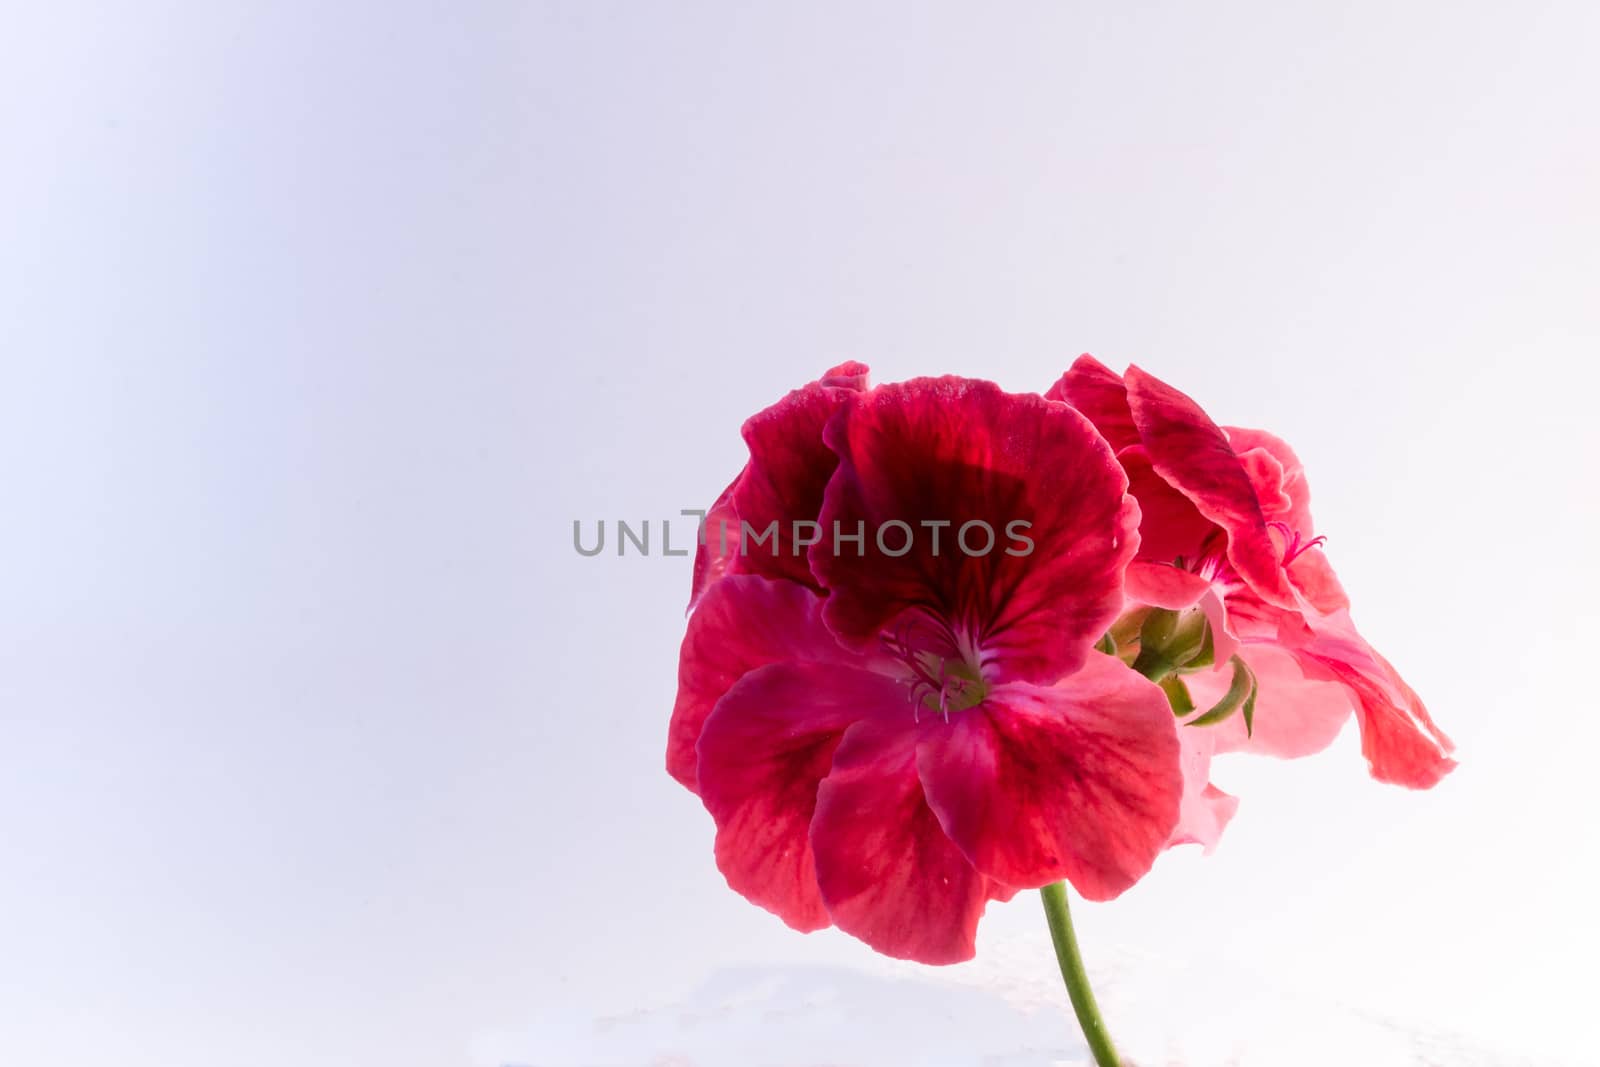 The flower Geranium by alanstix64